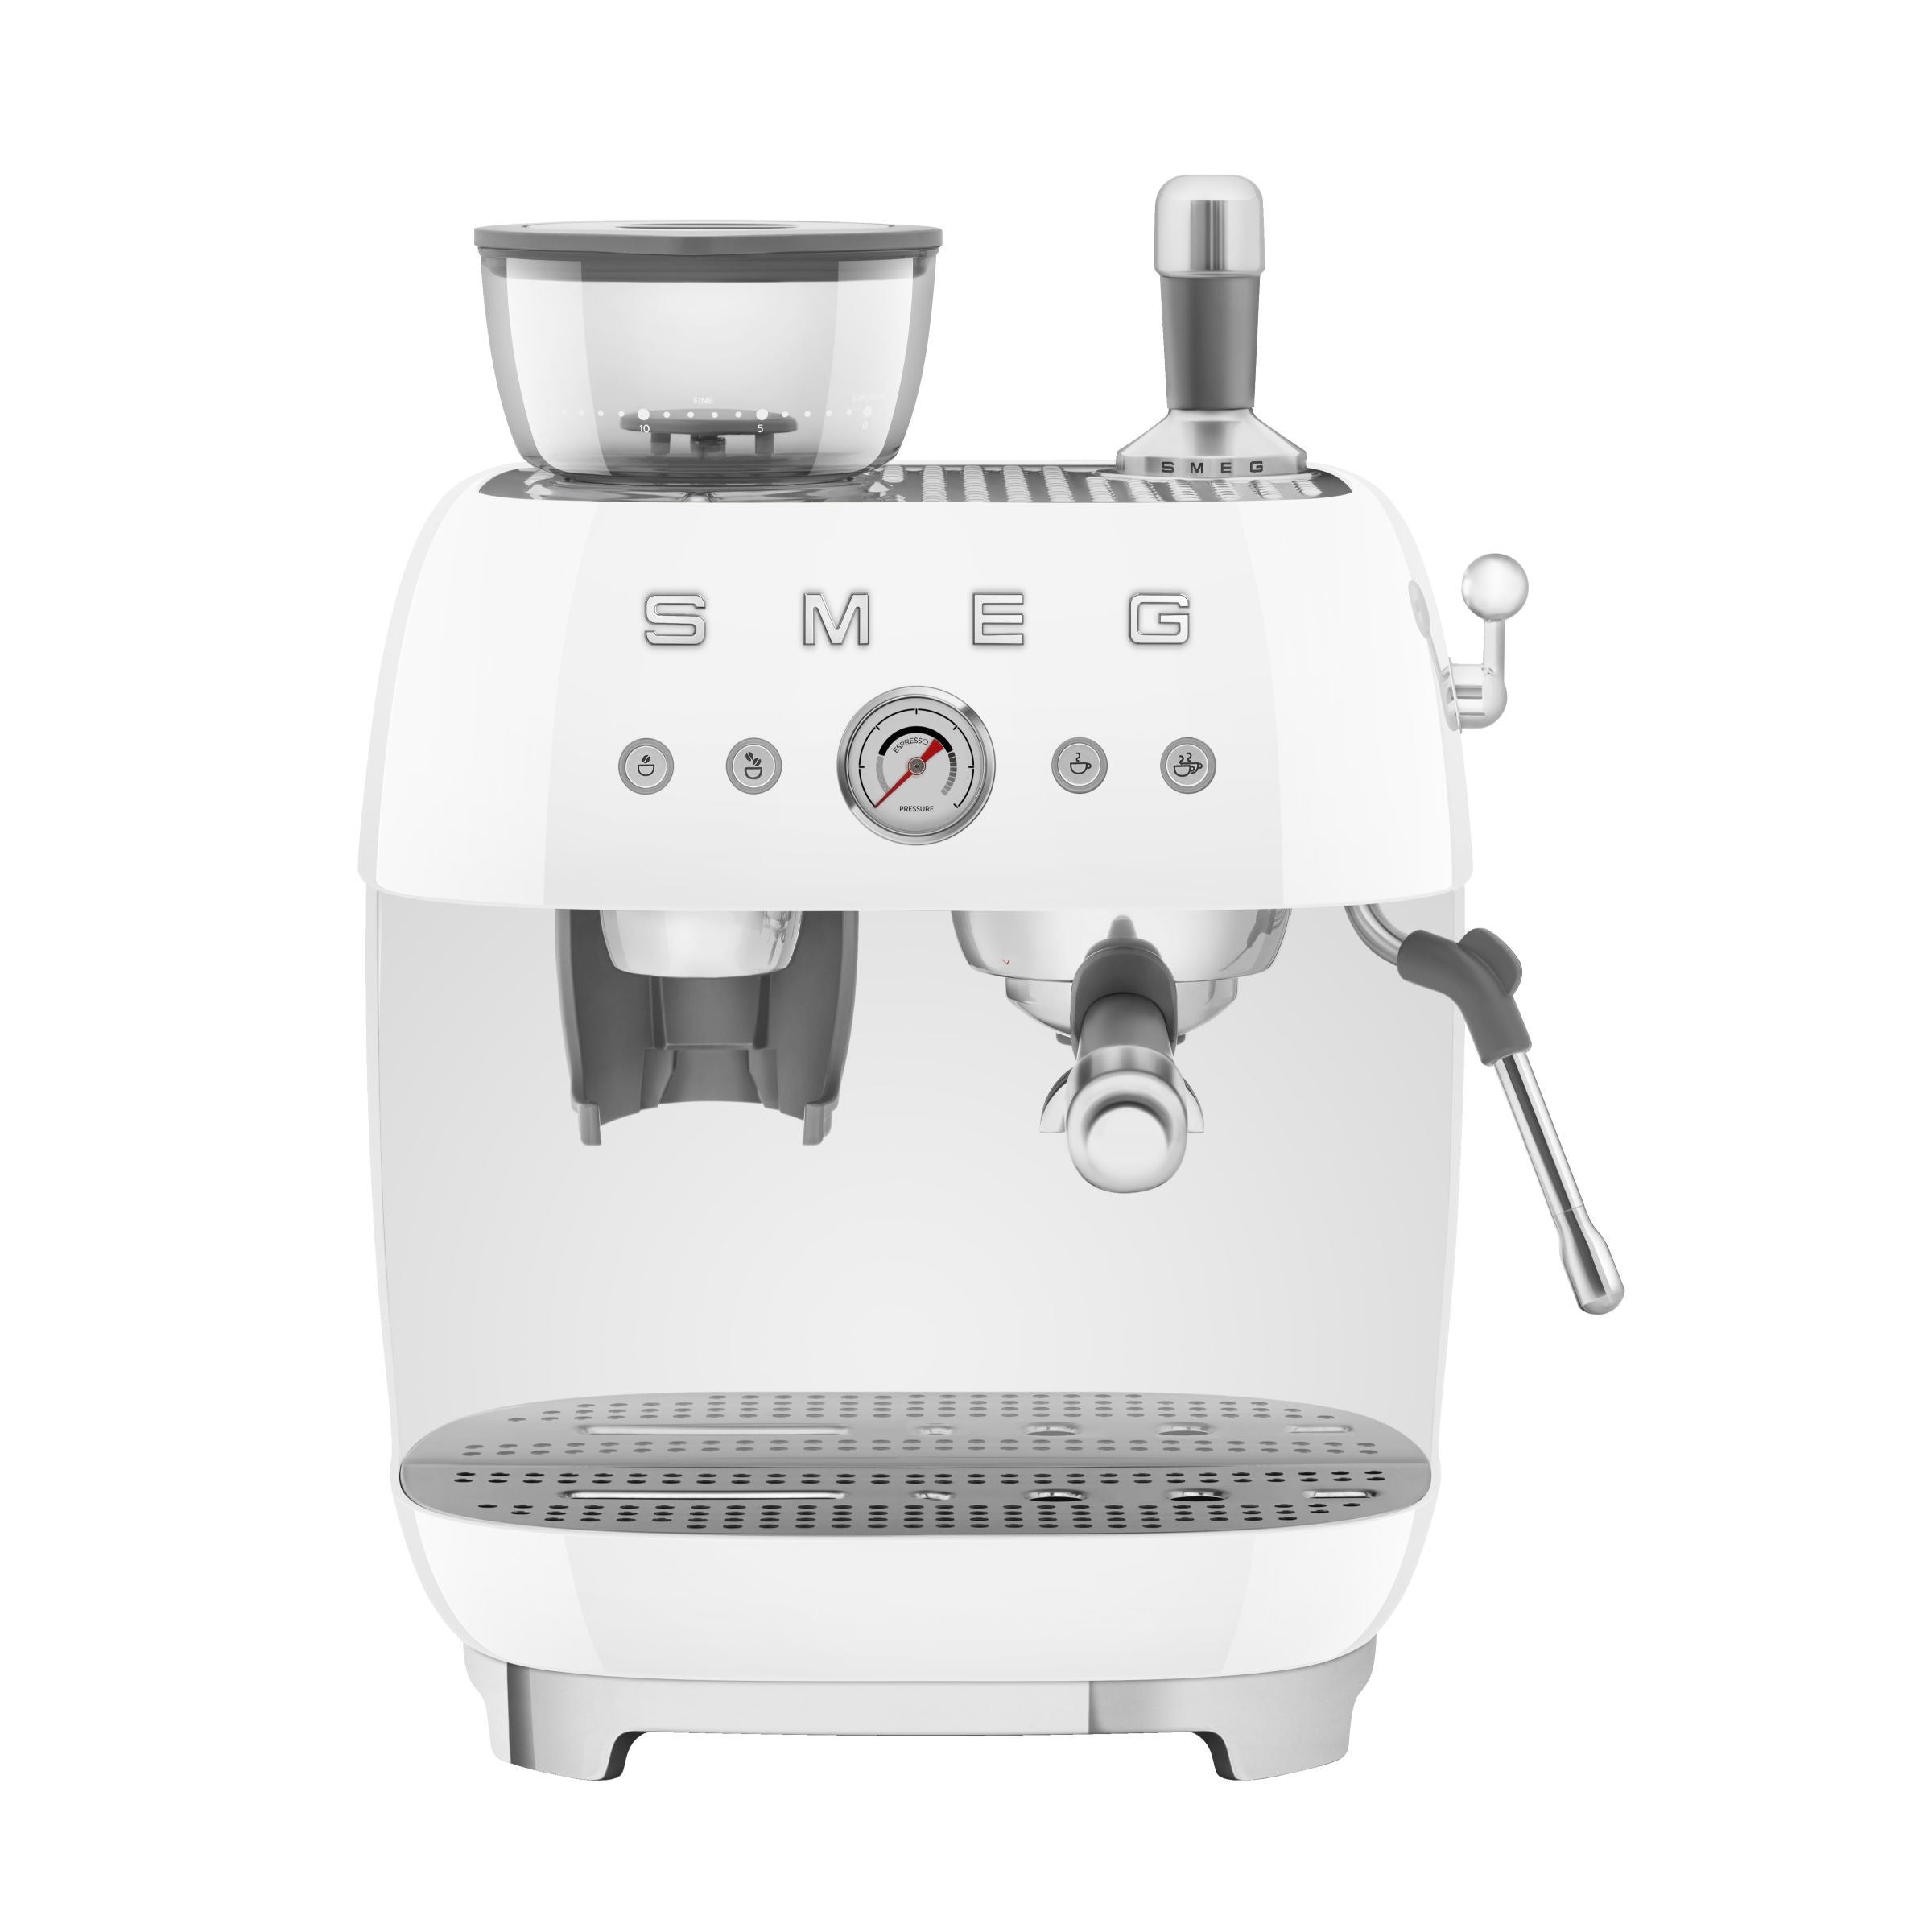 Smeg Espresso Machine with Grinder - Photo 1